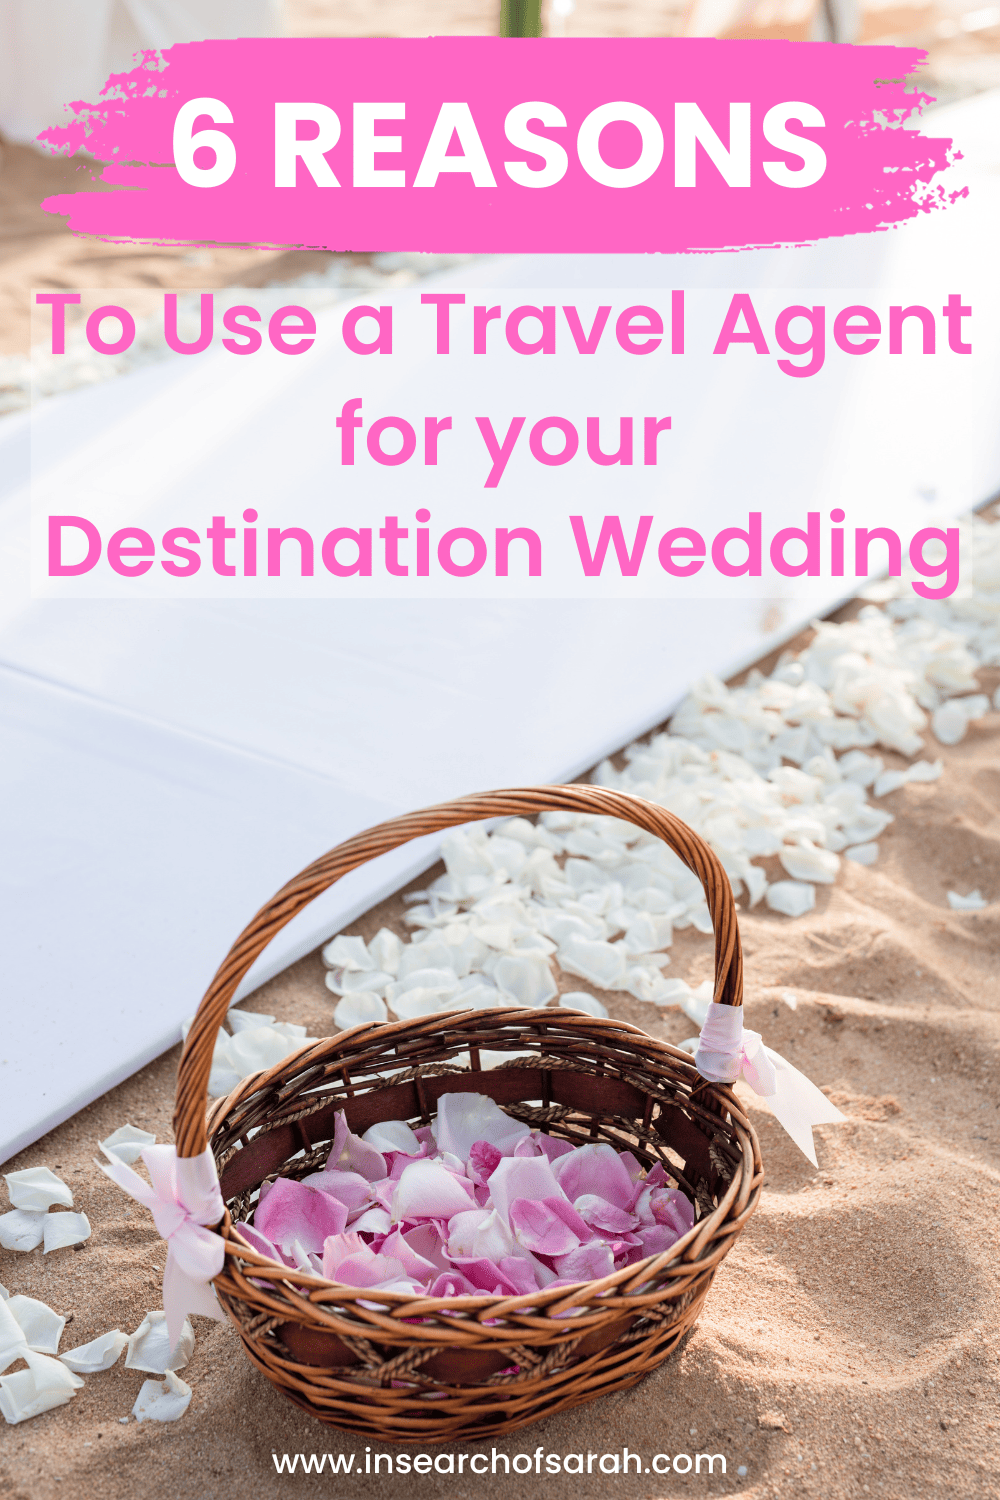 why use a destination wedding travel agent?